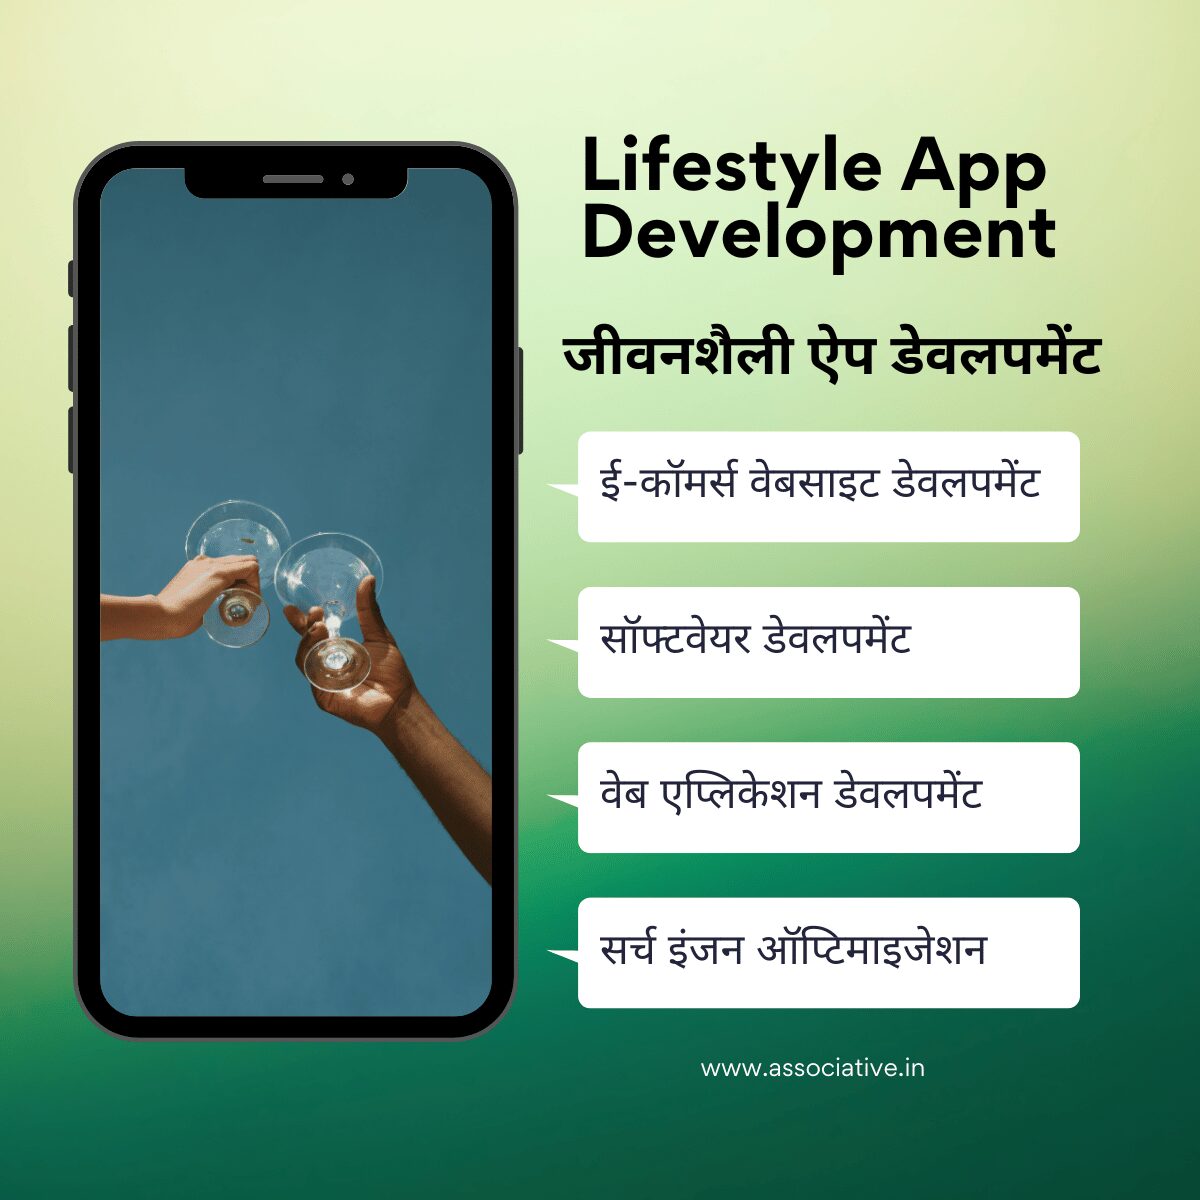 Lifestyle App Development जीवनशैली ऐप डेवलपमेंट